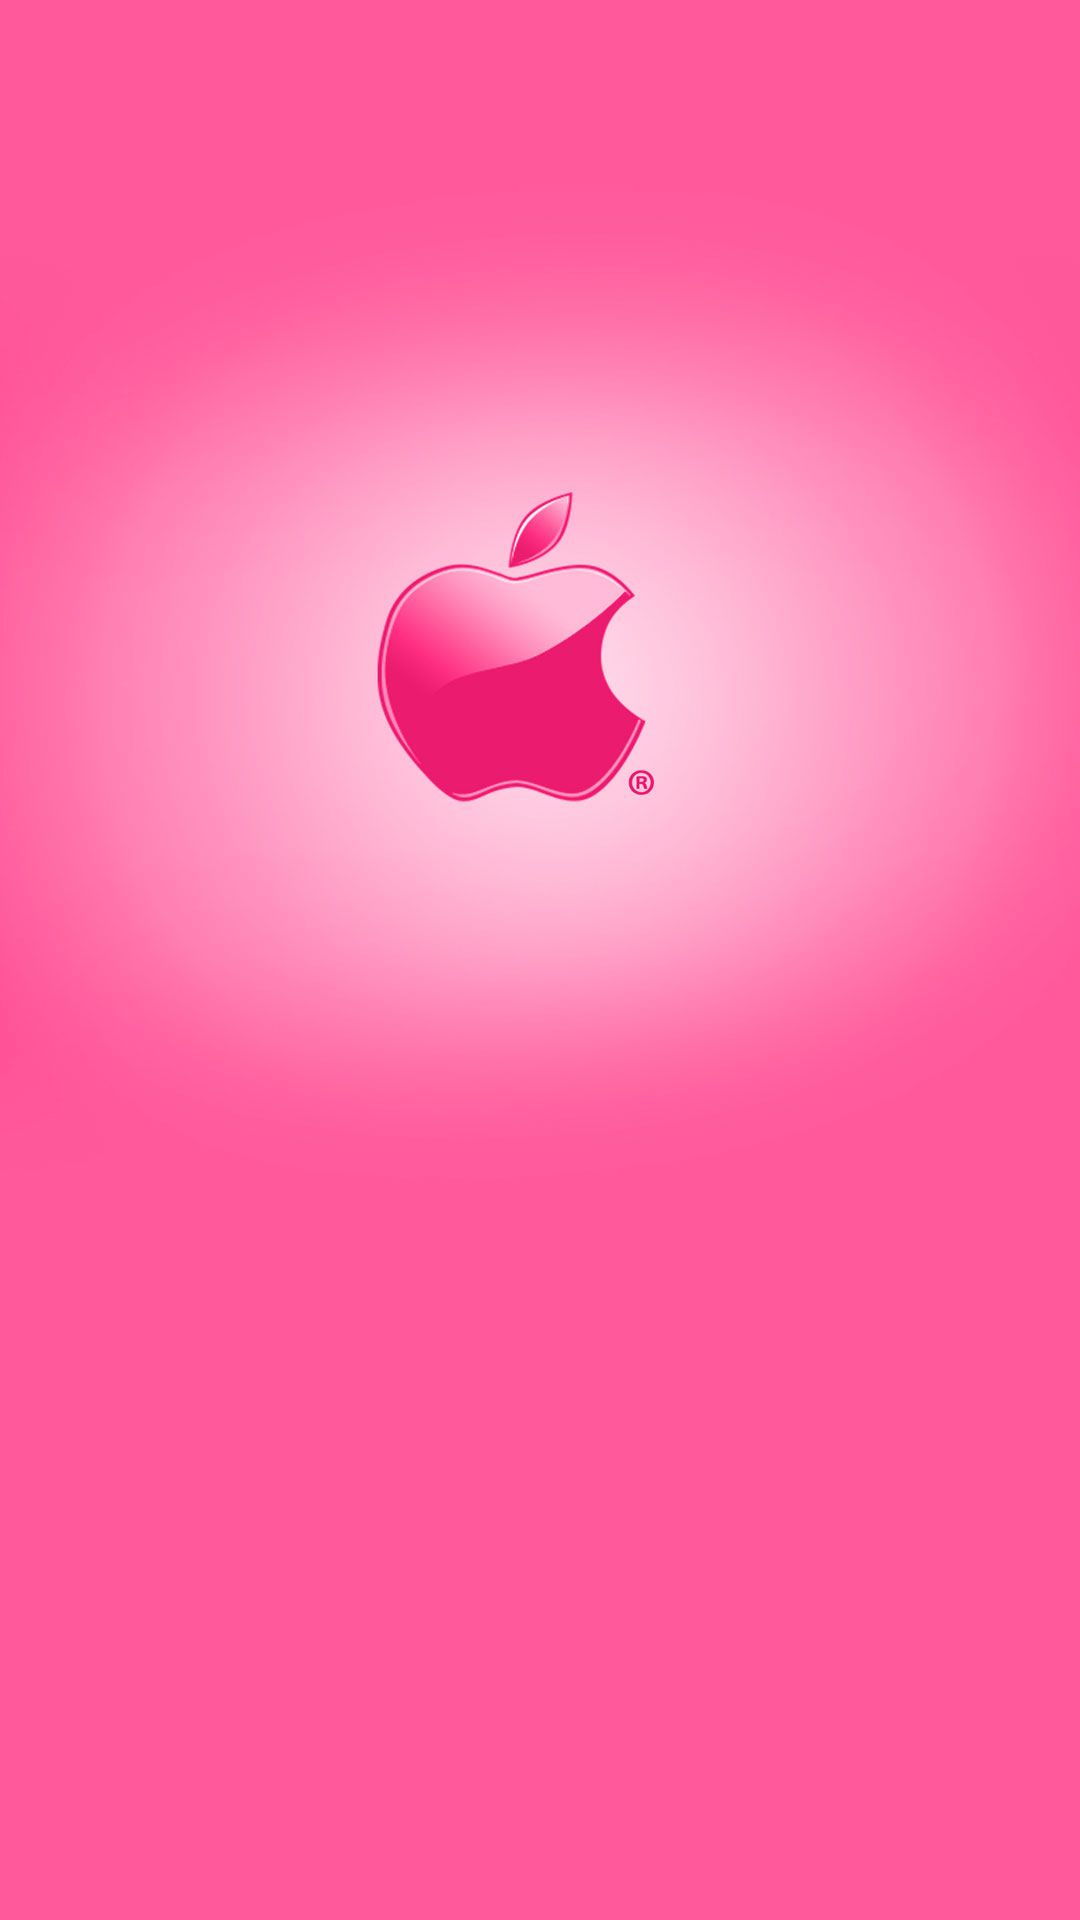 Wallpaper Weekends: In the Pink - Pink iPhone Fondos de pantalla. Fondo de  pantalla rosados para iPhone. de Apple, Rosados para iphone - Todo fondos